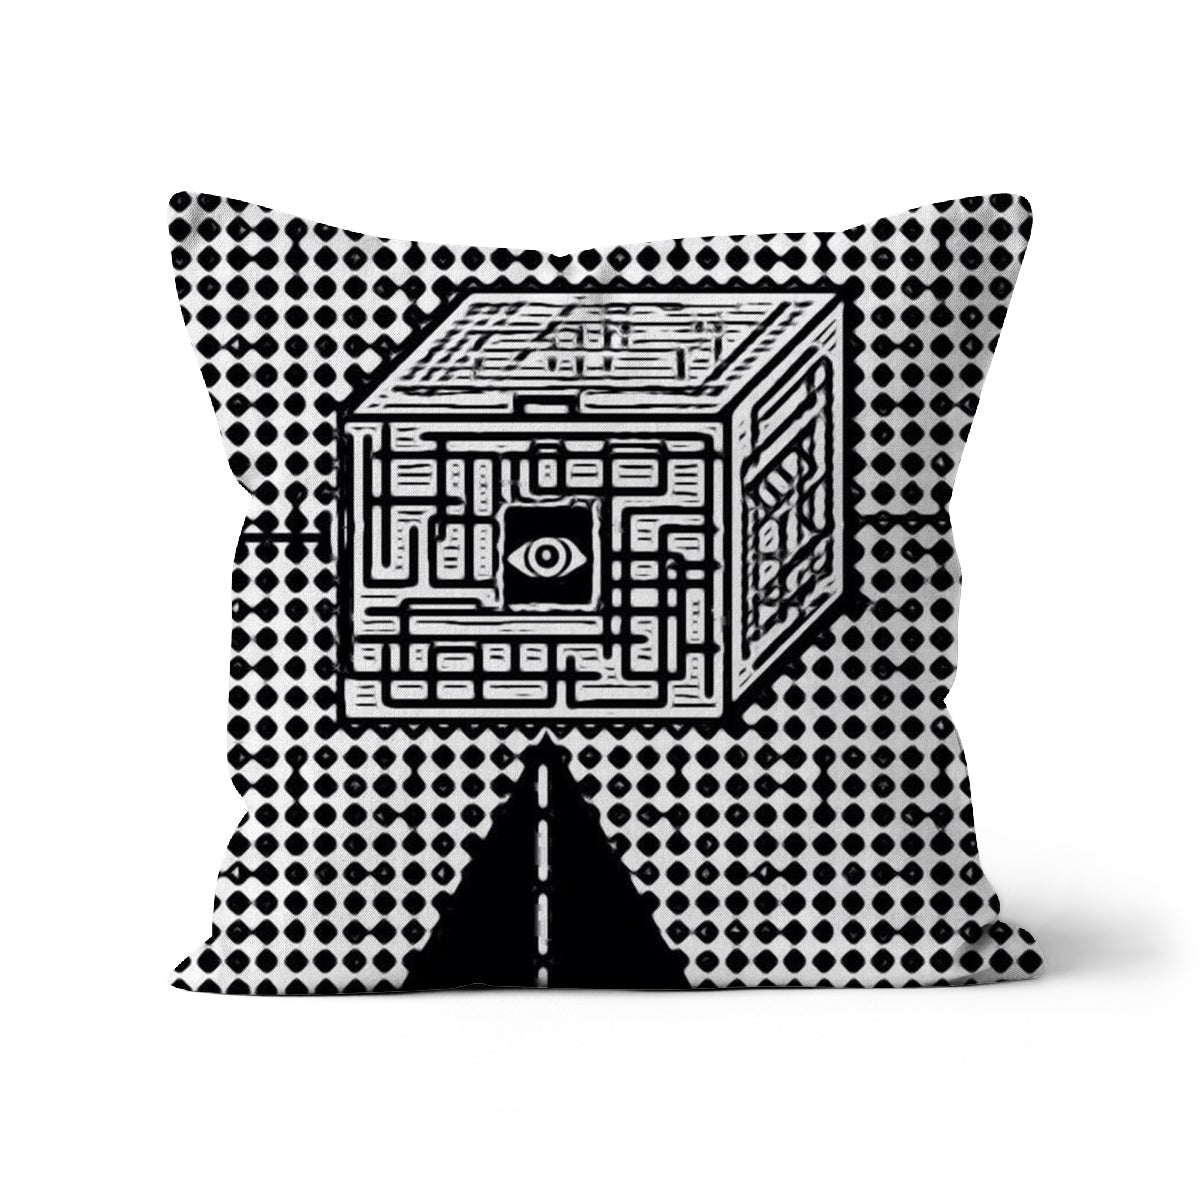 The Cube Cushion